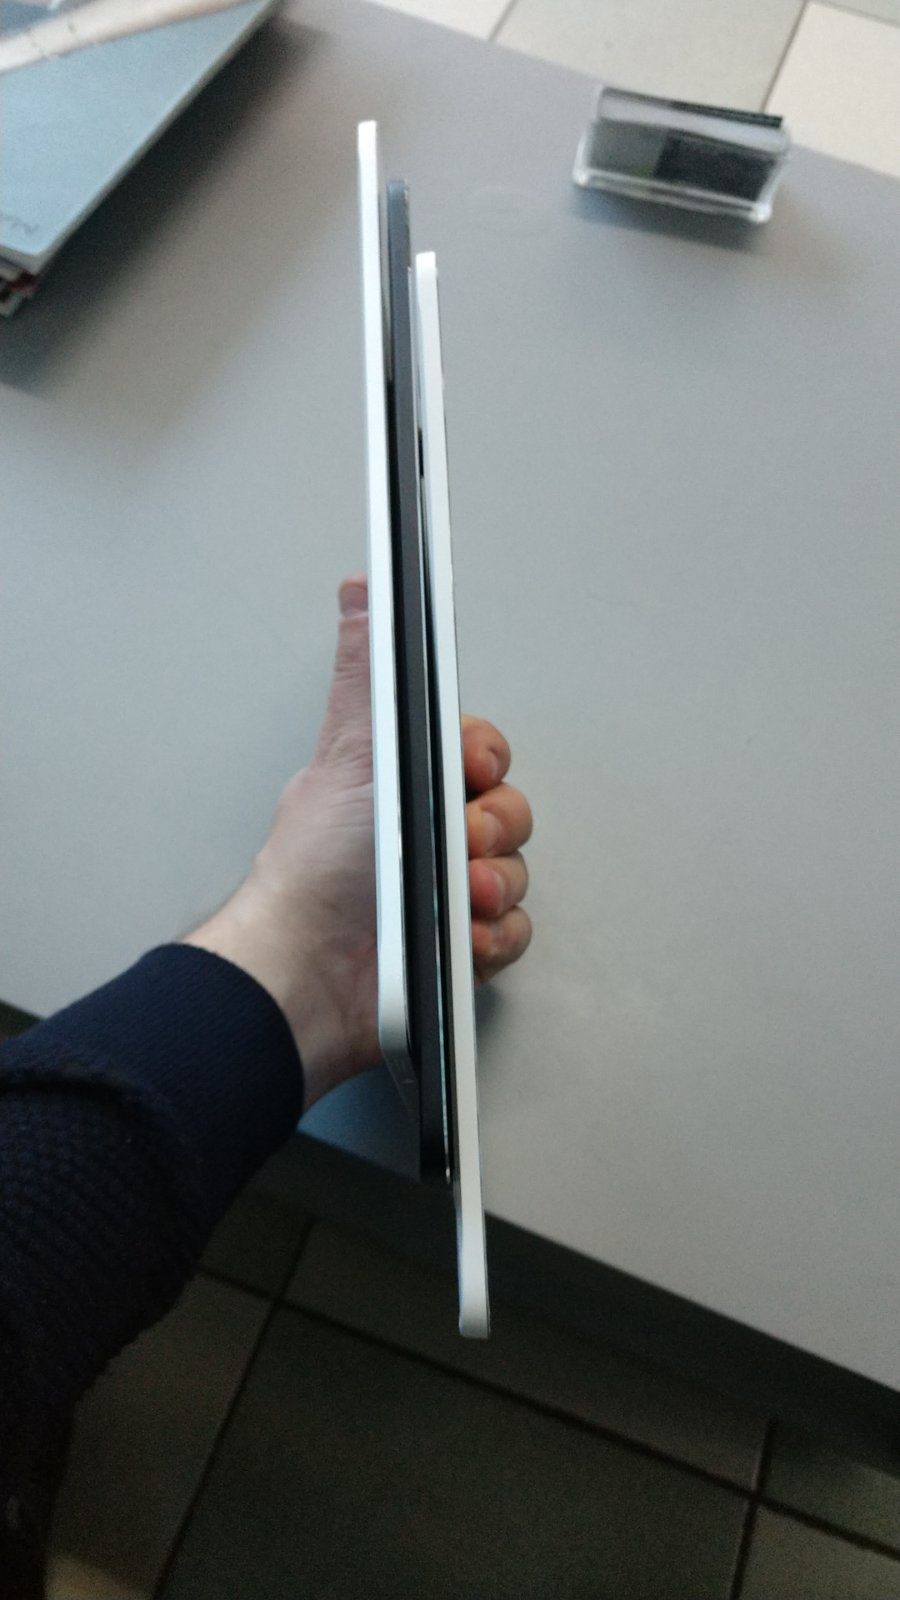 Samsung Tab S2 планшет